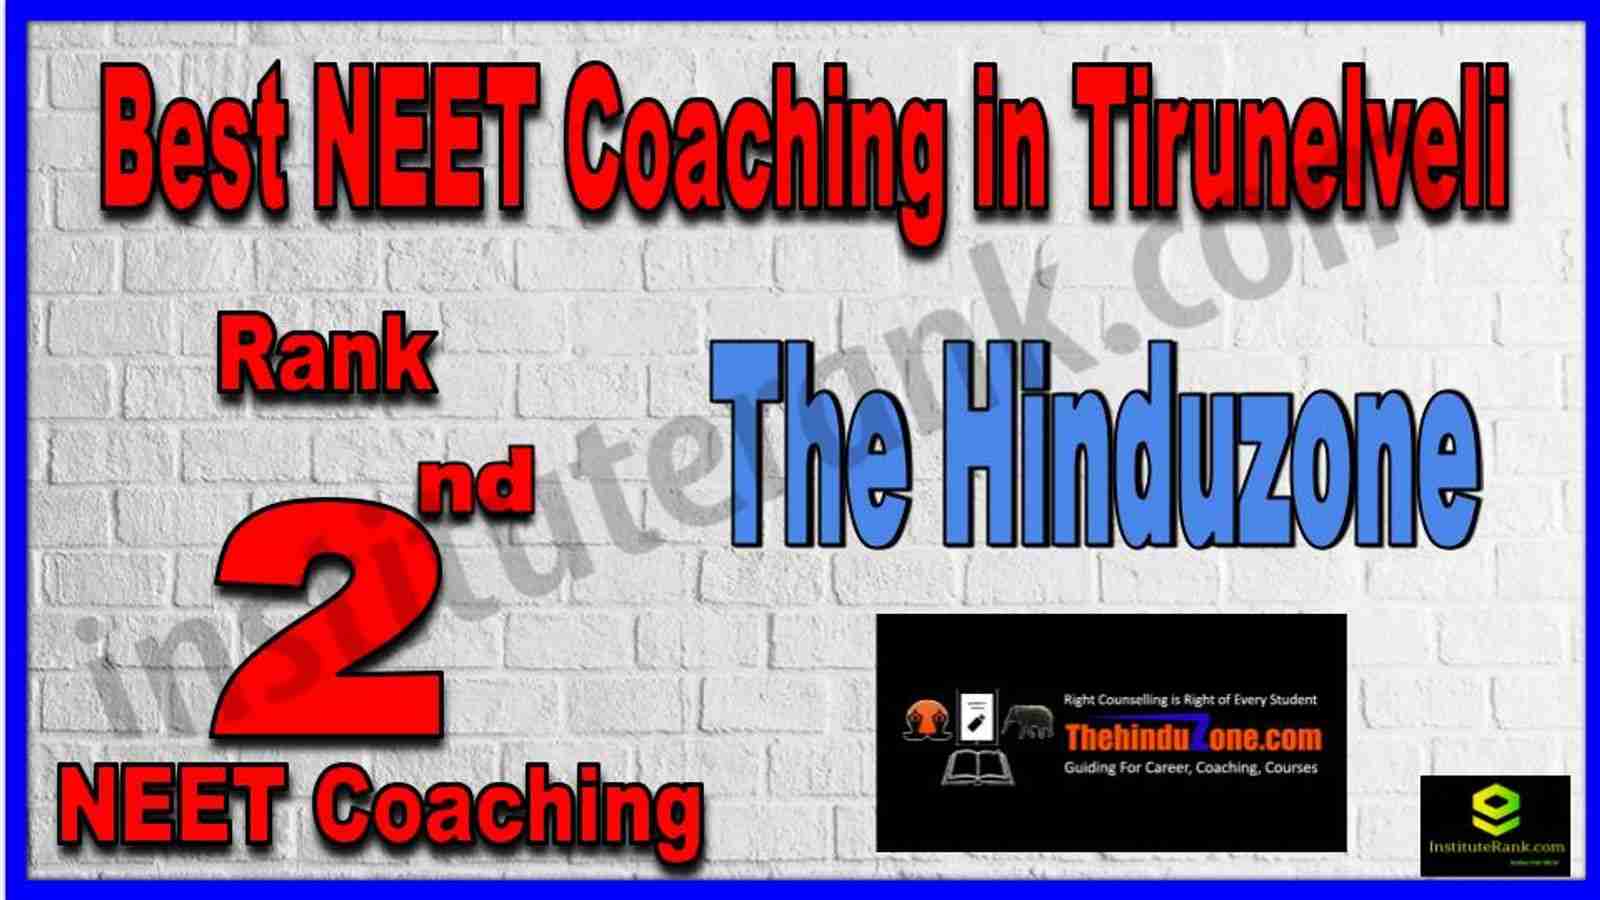 Rank 2nd Best NEET Coaching in Tirunelveli